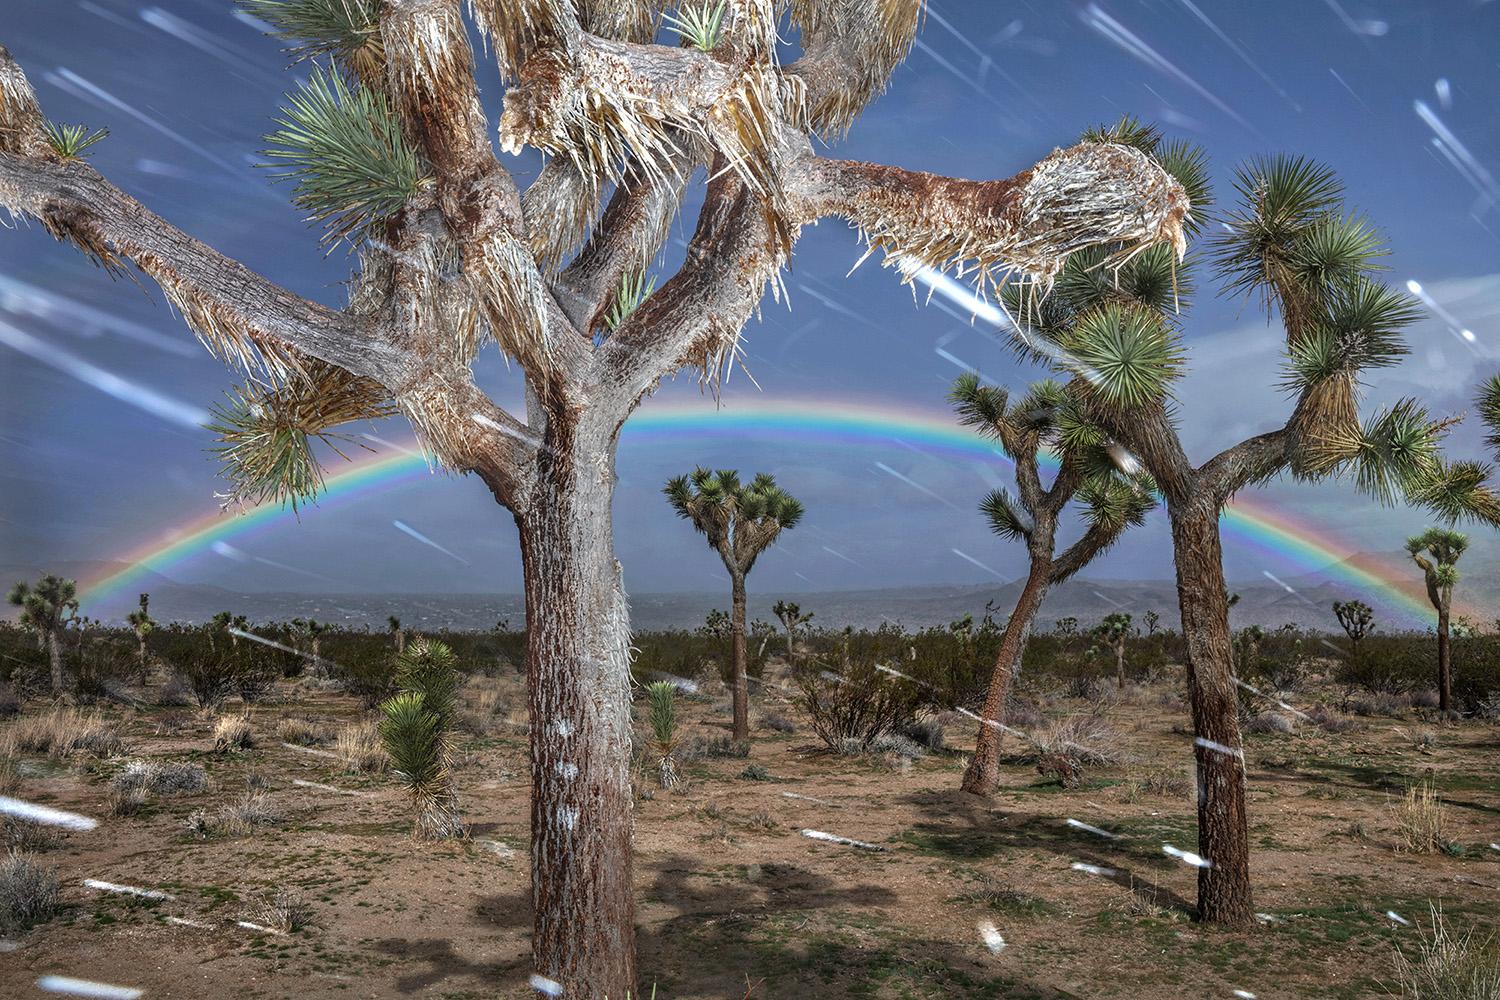 Thomas Michael Alleman Color Photograph - Other Desert Cities, Joshua Tree, CA, 2018